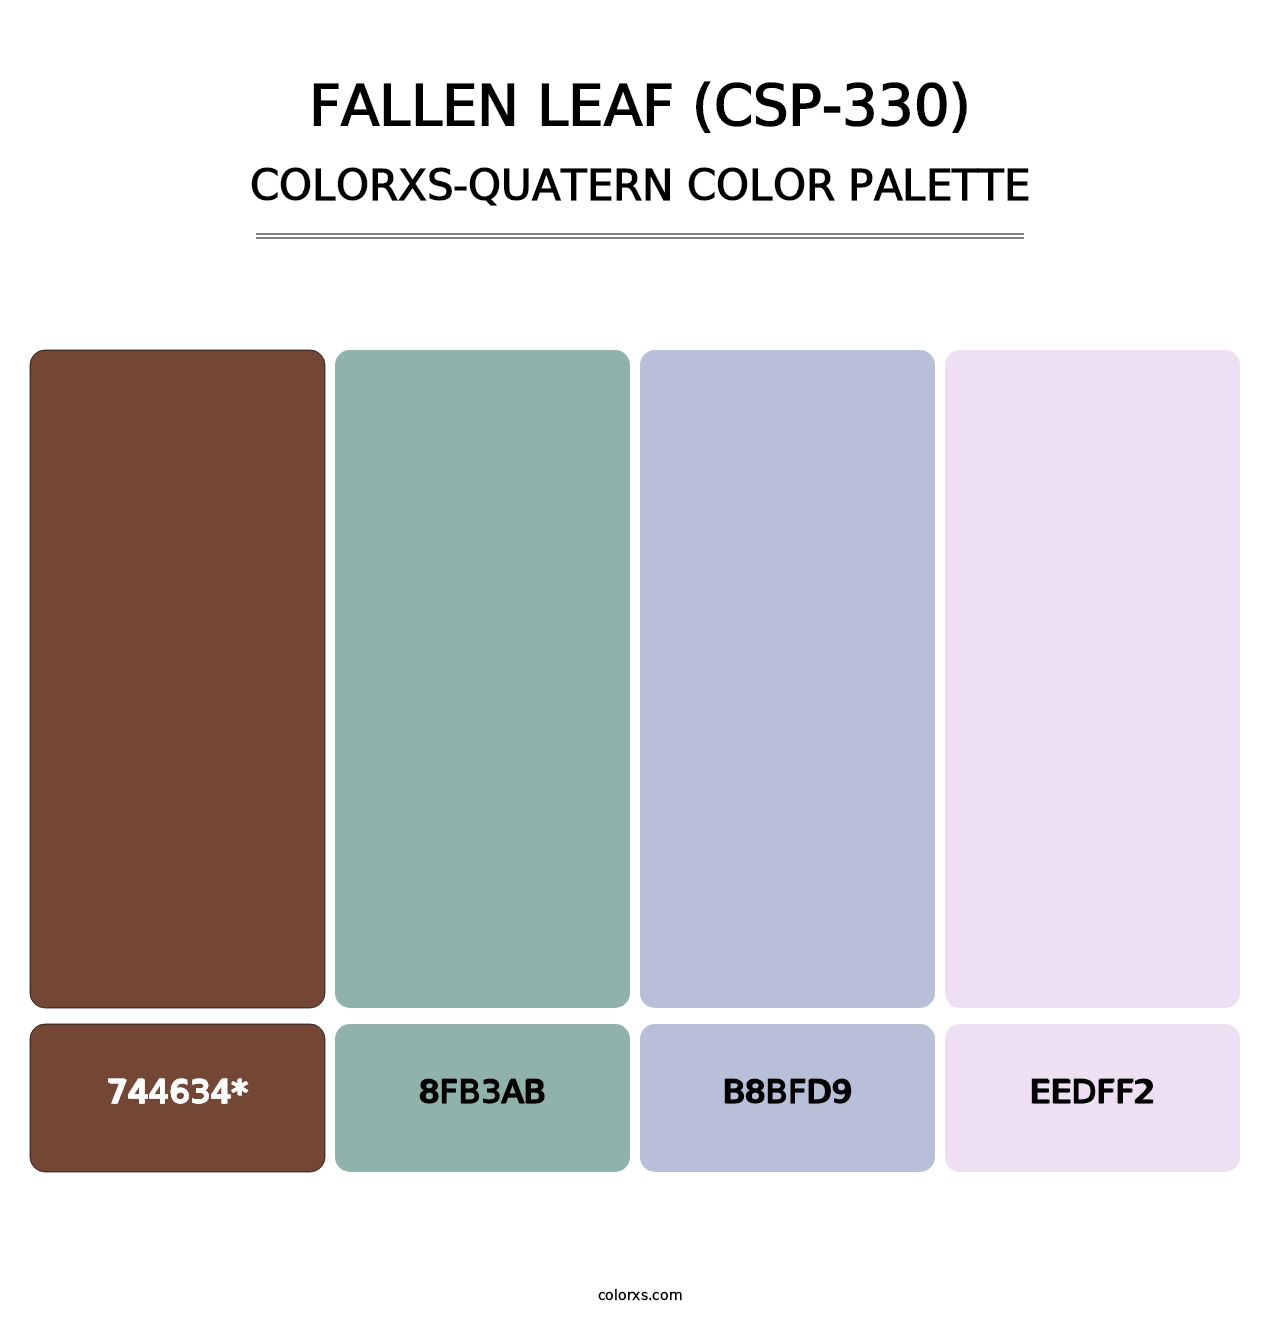 Fallen Leaf (CSP-330) - Colorxs Quatern Palette